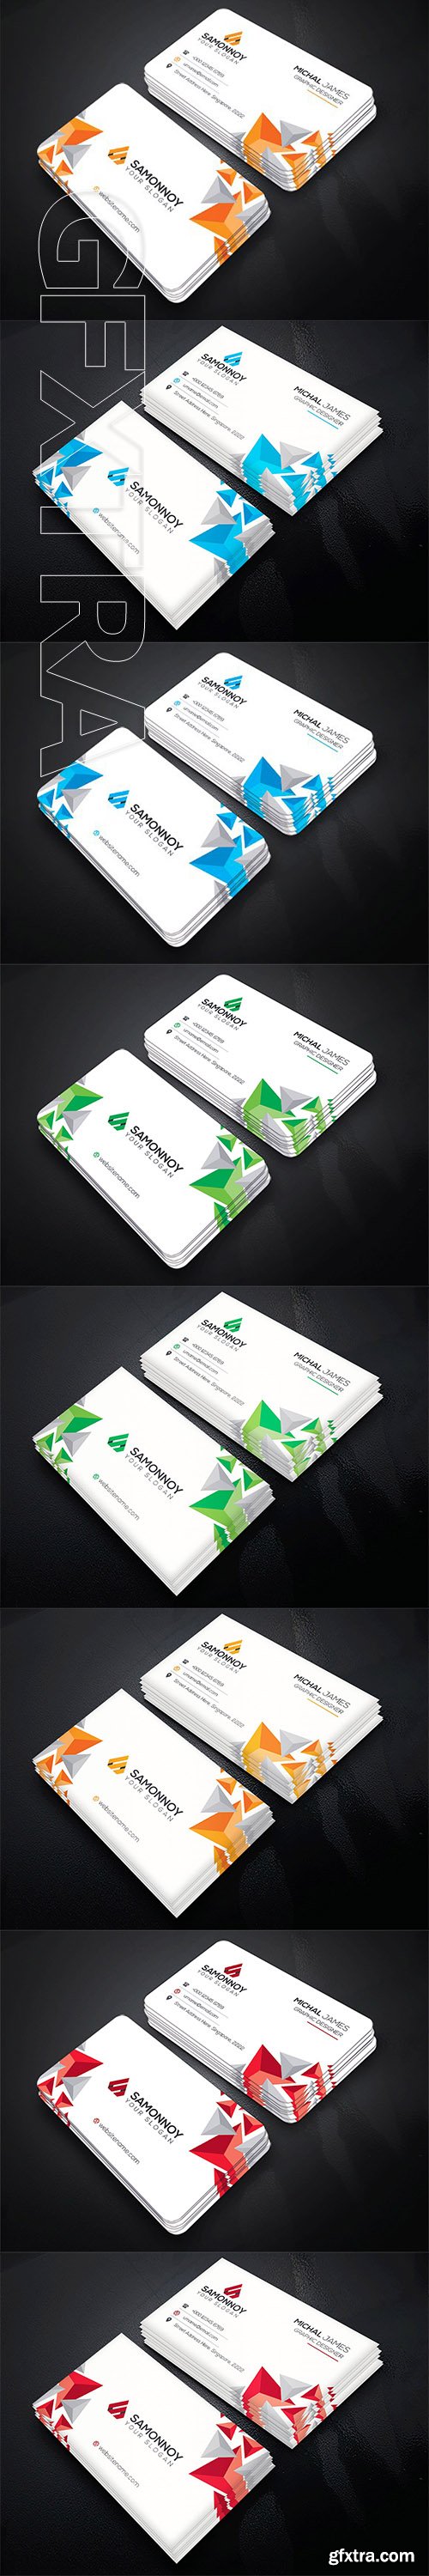 CreativeMarket - Business Cards 2369564